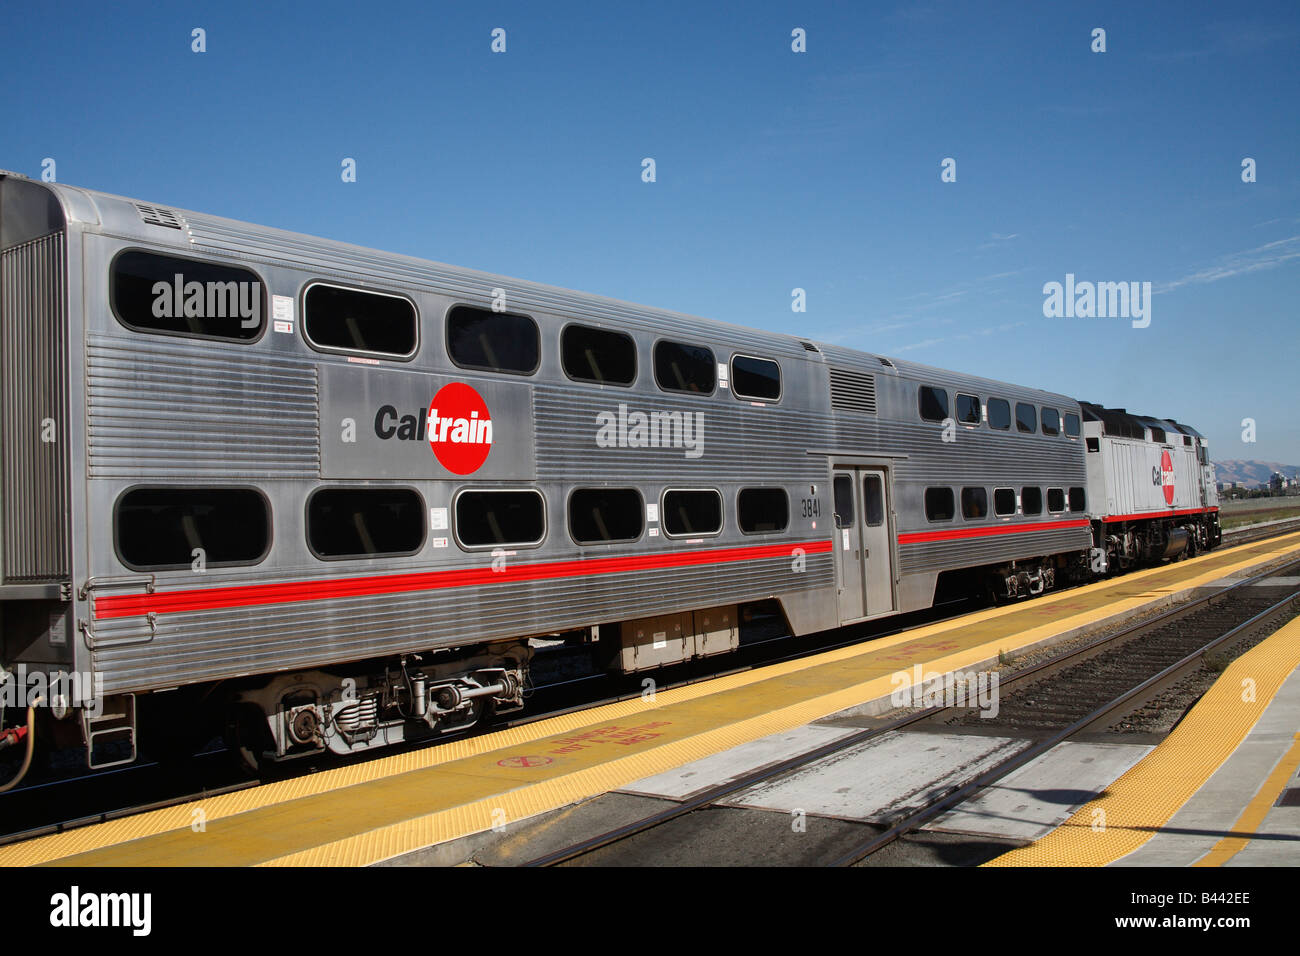 Santa clara station hi-res stock photography and images - Alamy